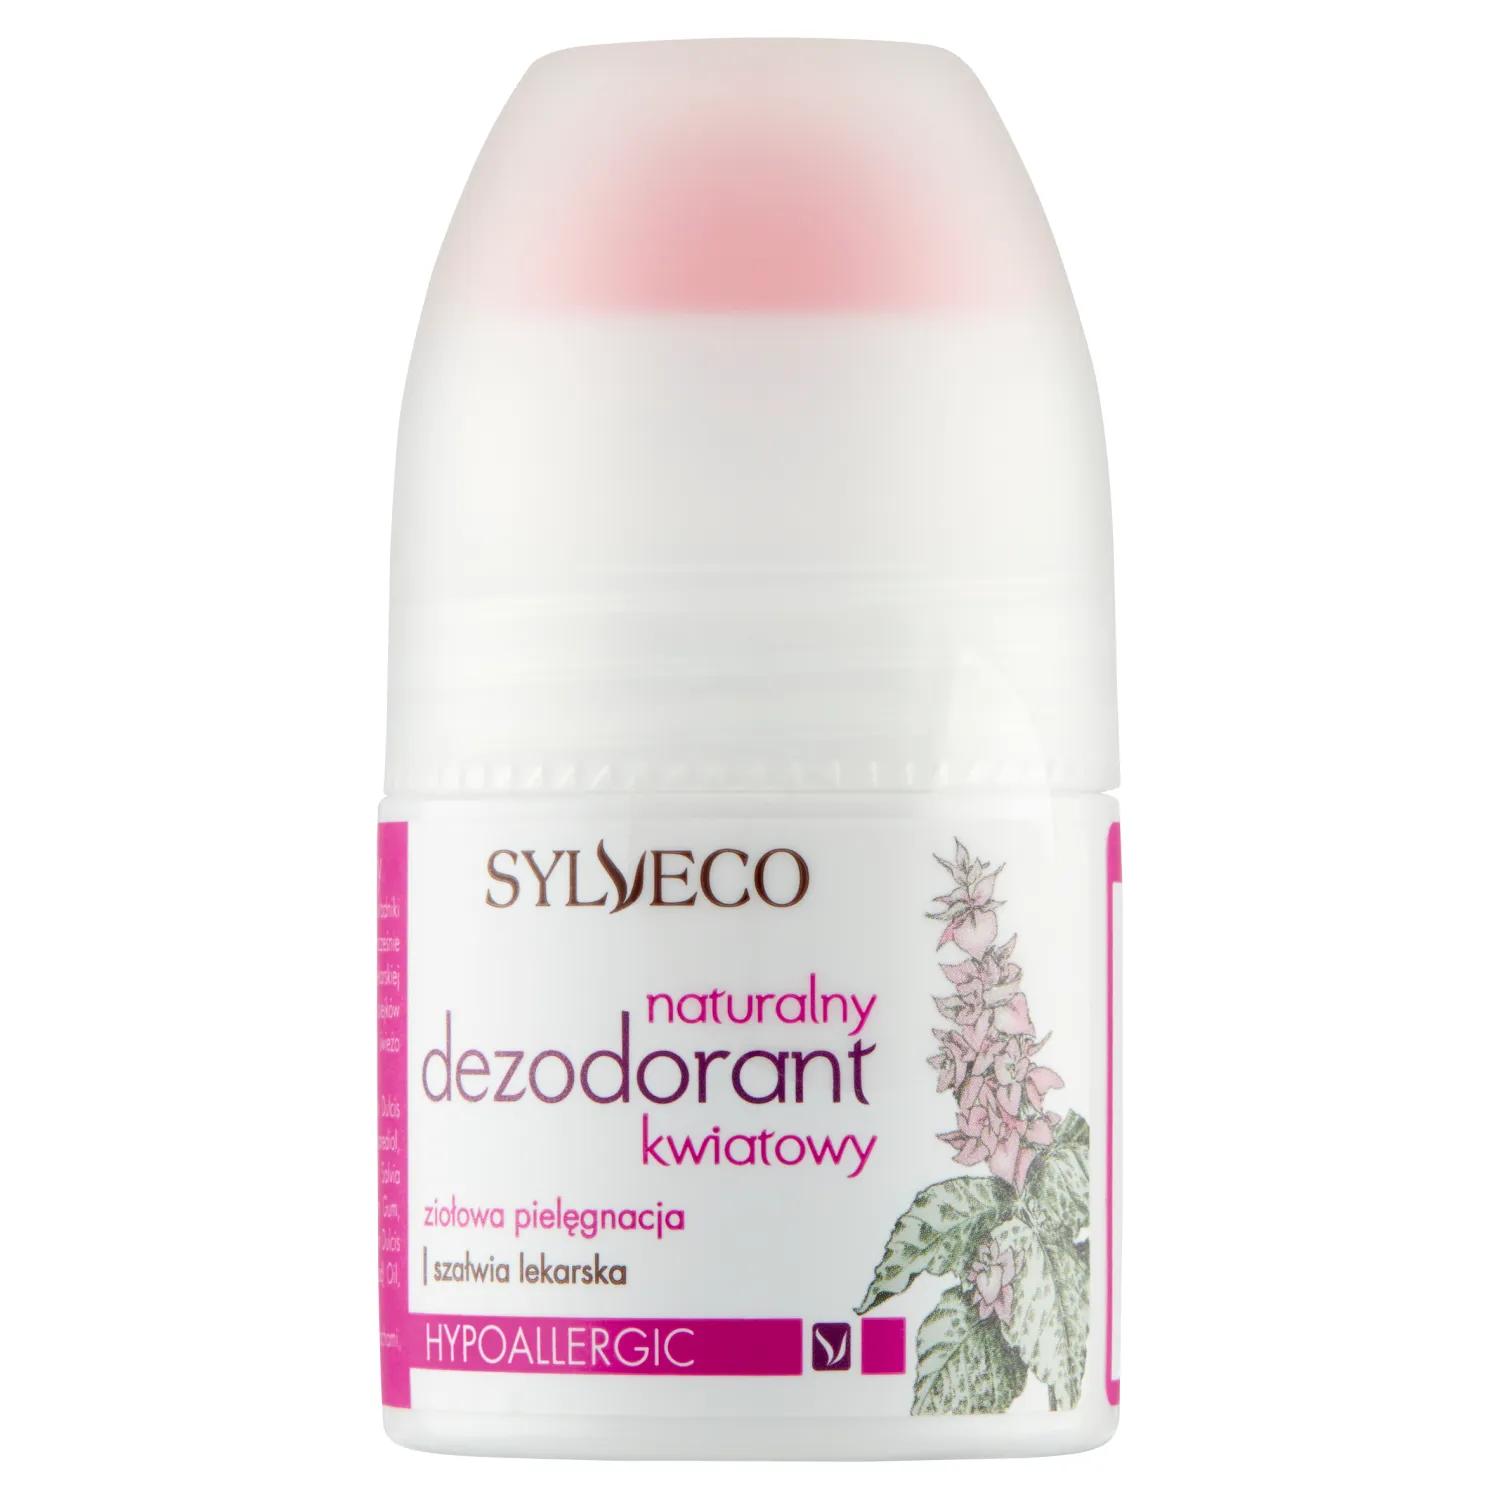 Sylveco, dezodorant naturalny kwiatowy, roll-on, 50 ml